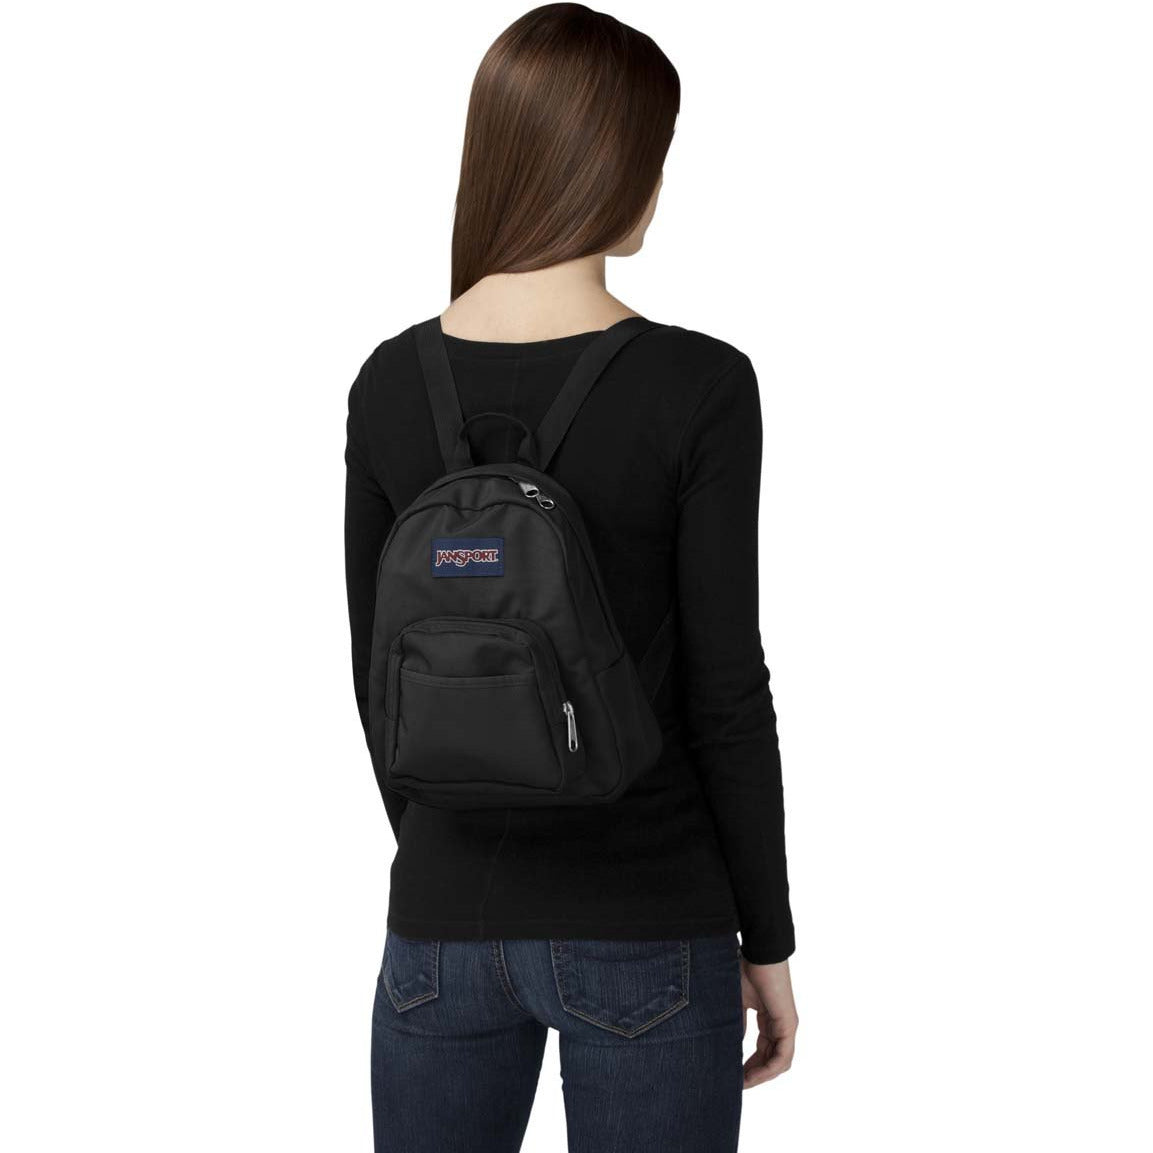 JanSport Half Pint Mini Backpack - Black